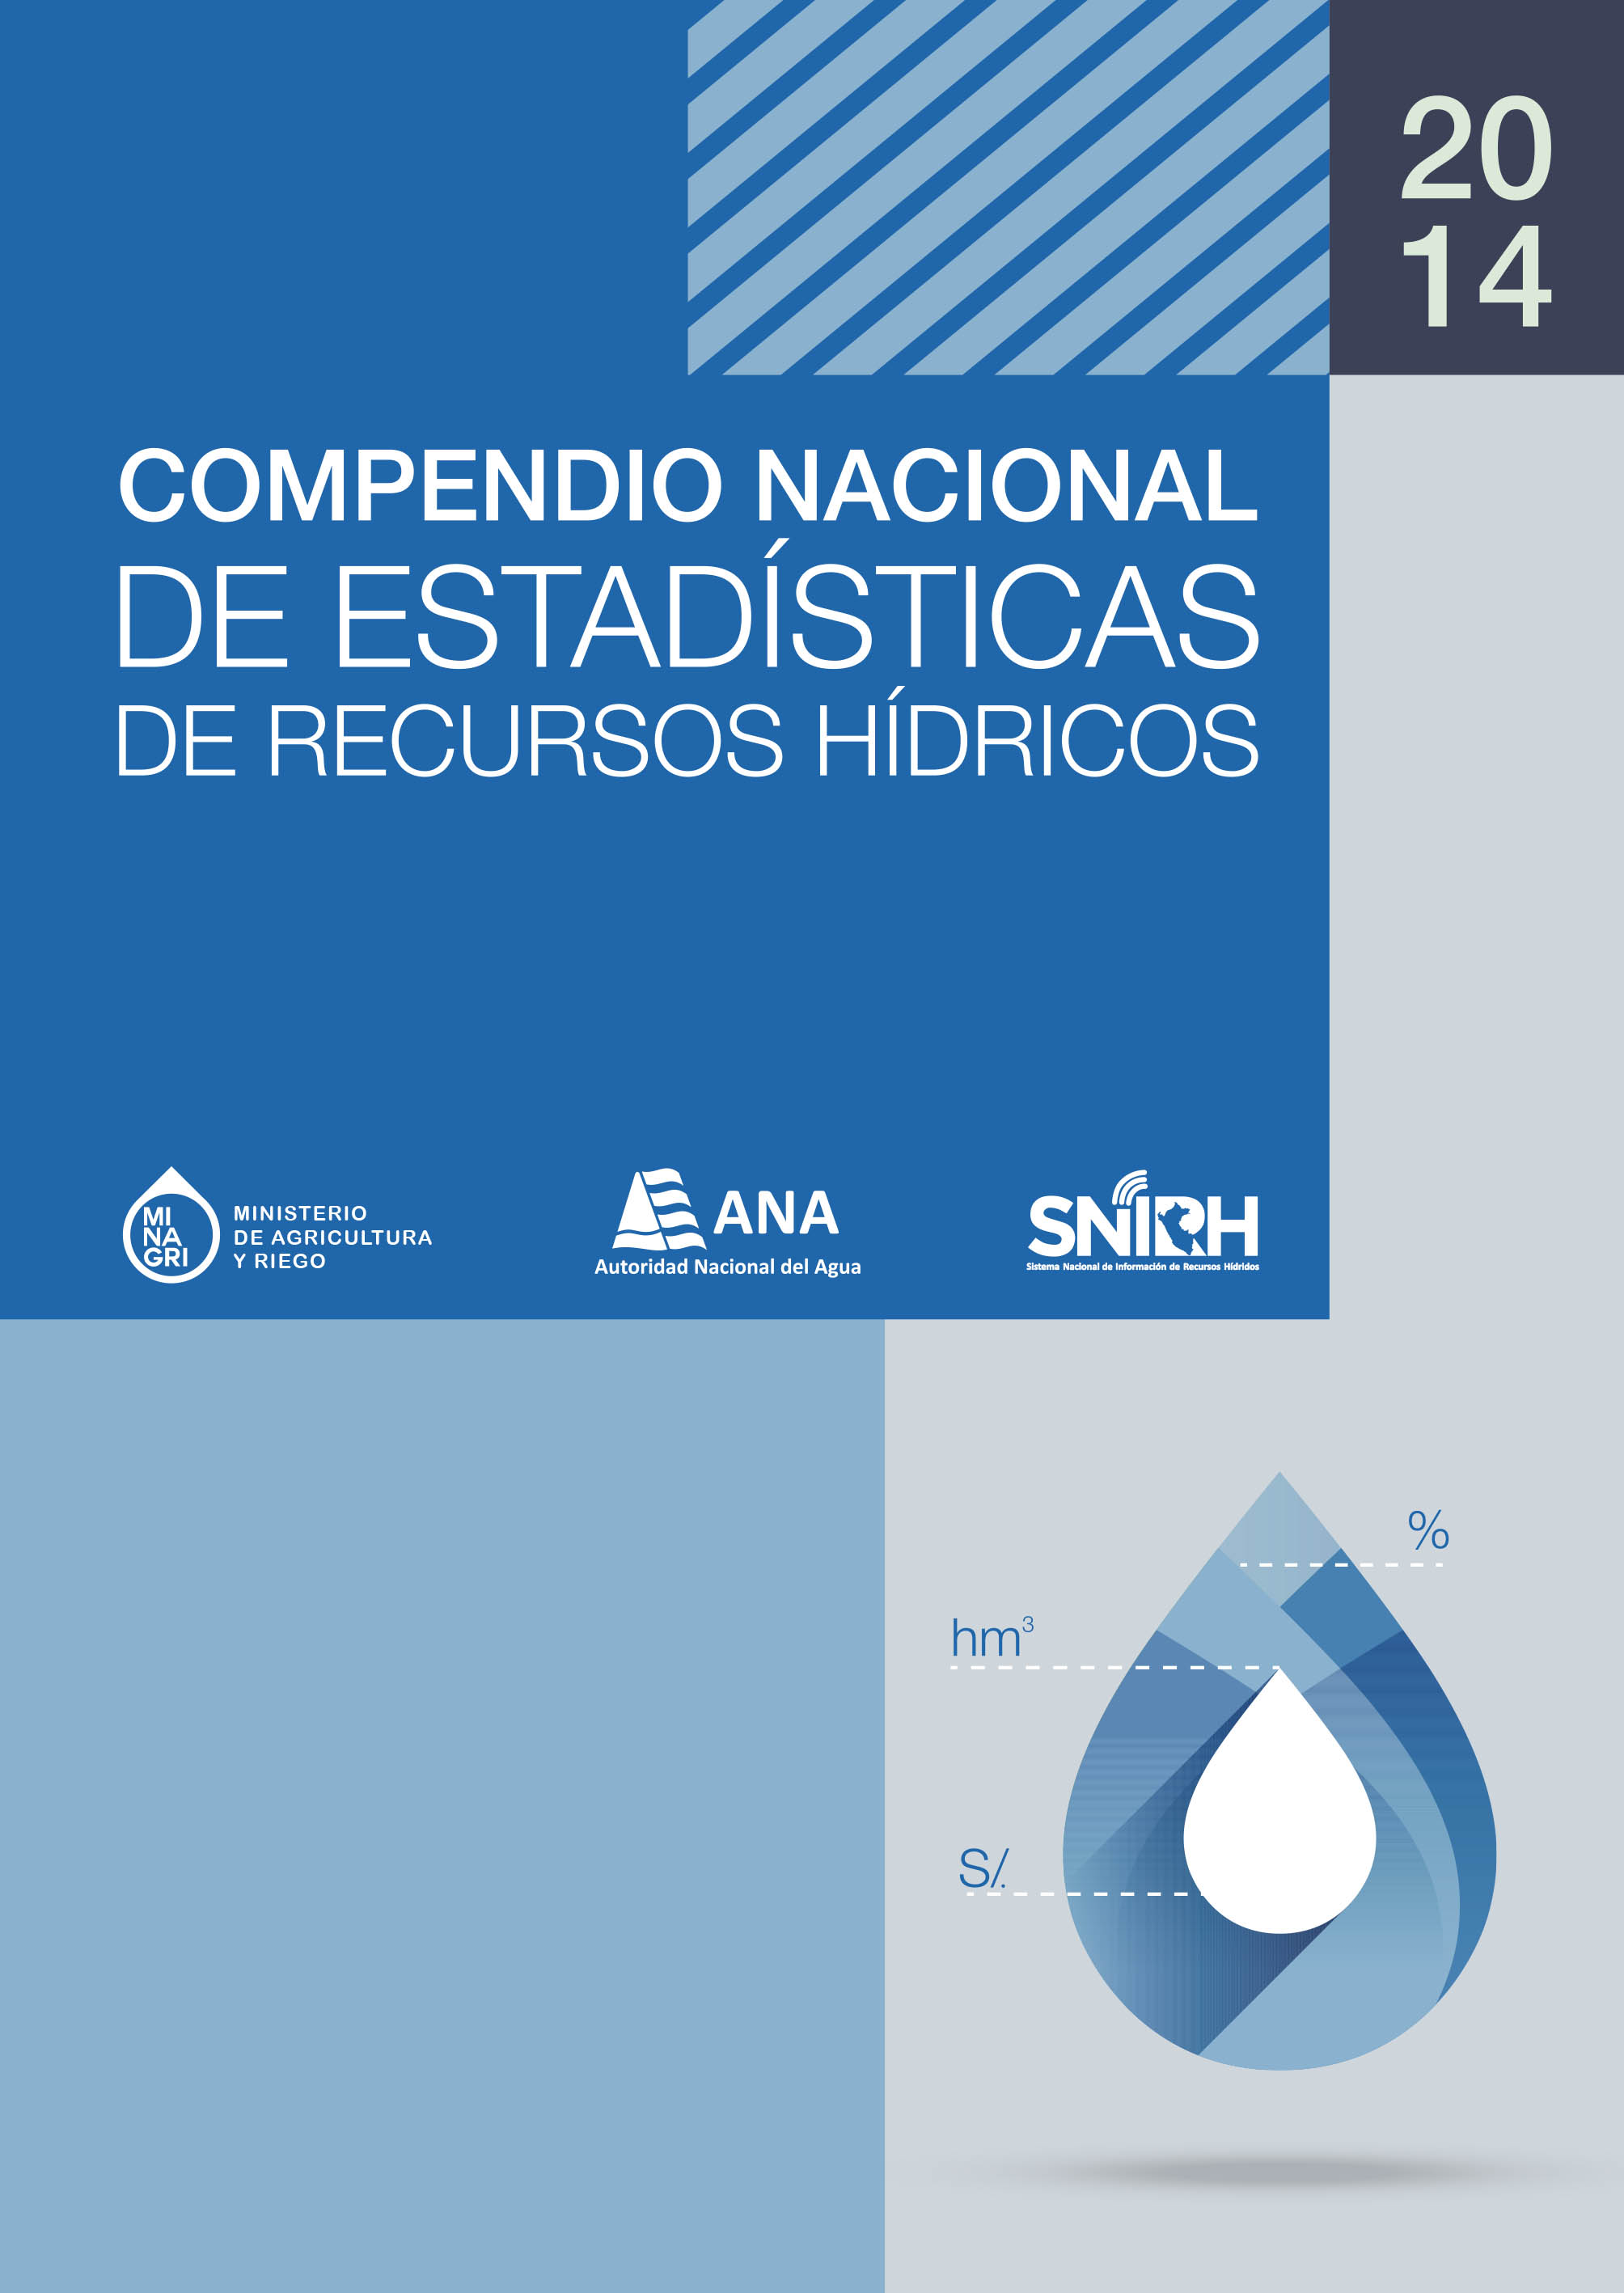 COMPENDIO NACIONAL ESTADISTICAS DE RECURSOS HÍDRICOS 2014